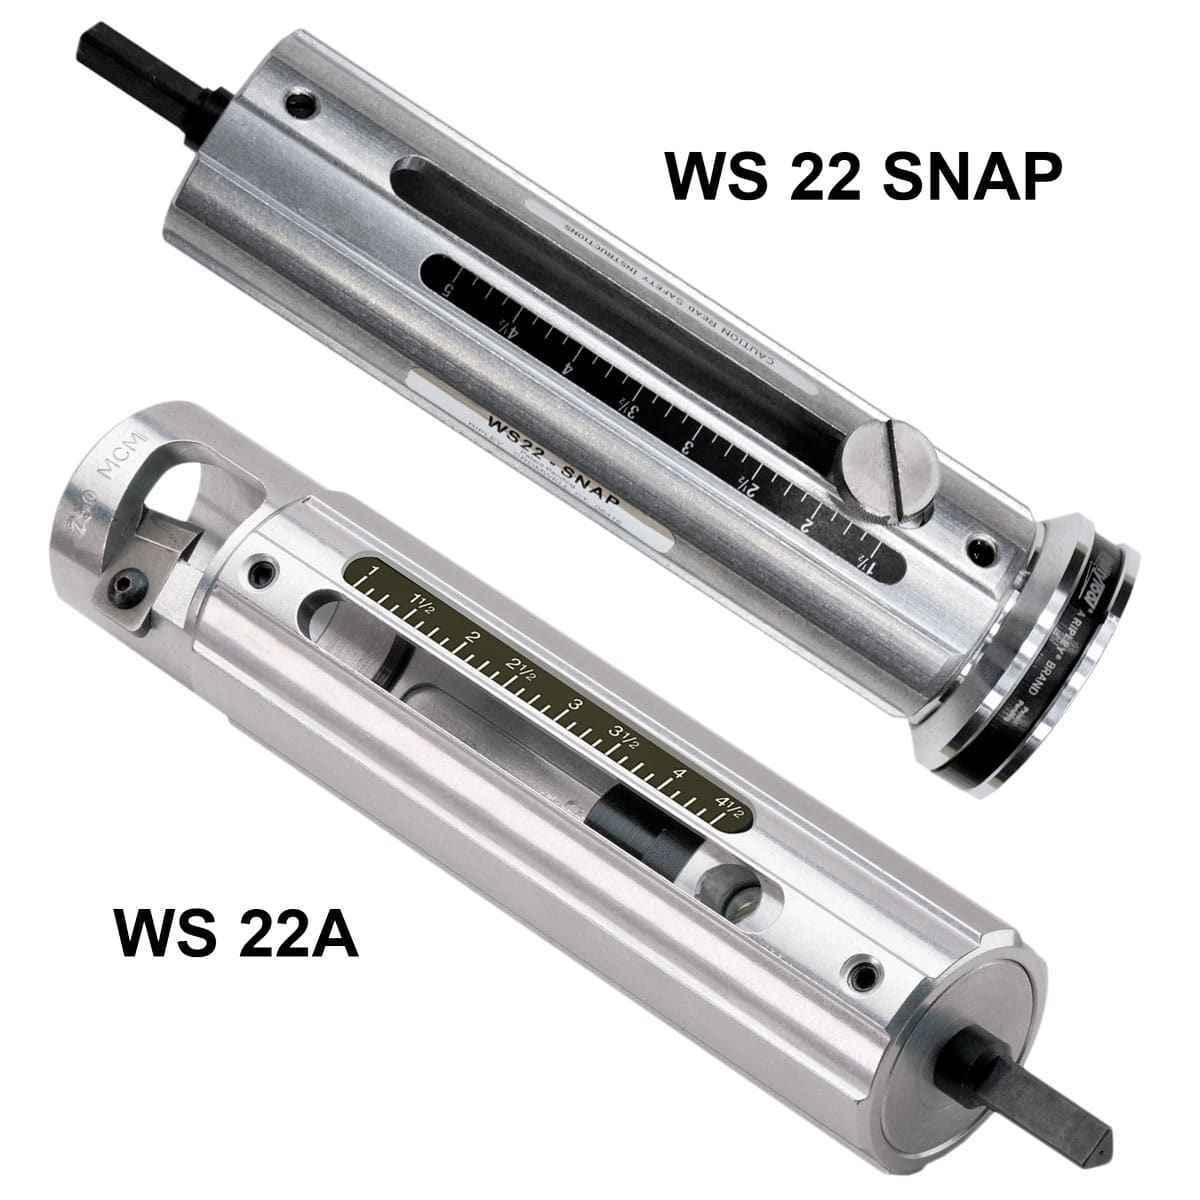 WS 22A & WS 22 SNAP Series image